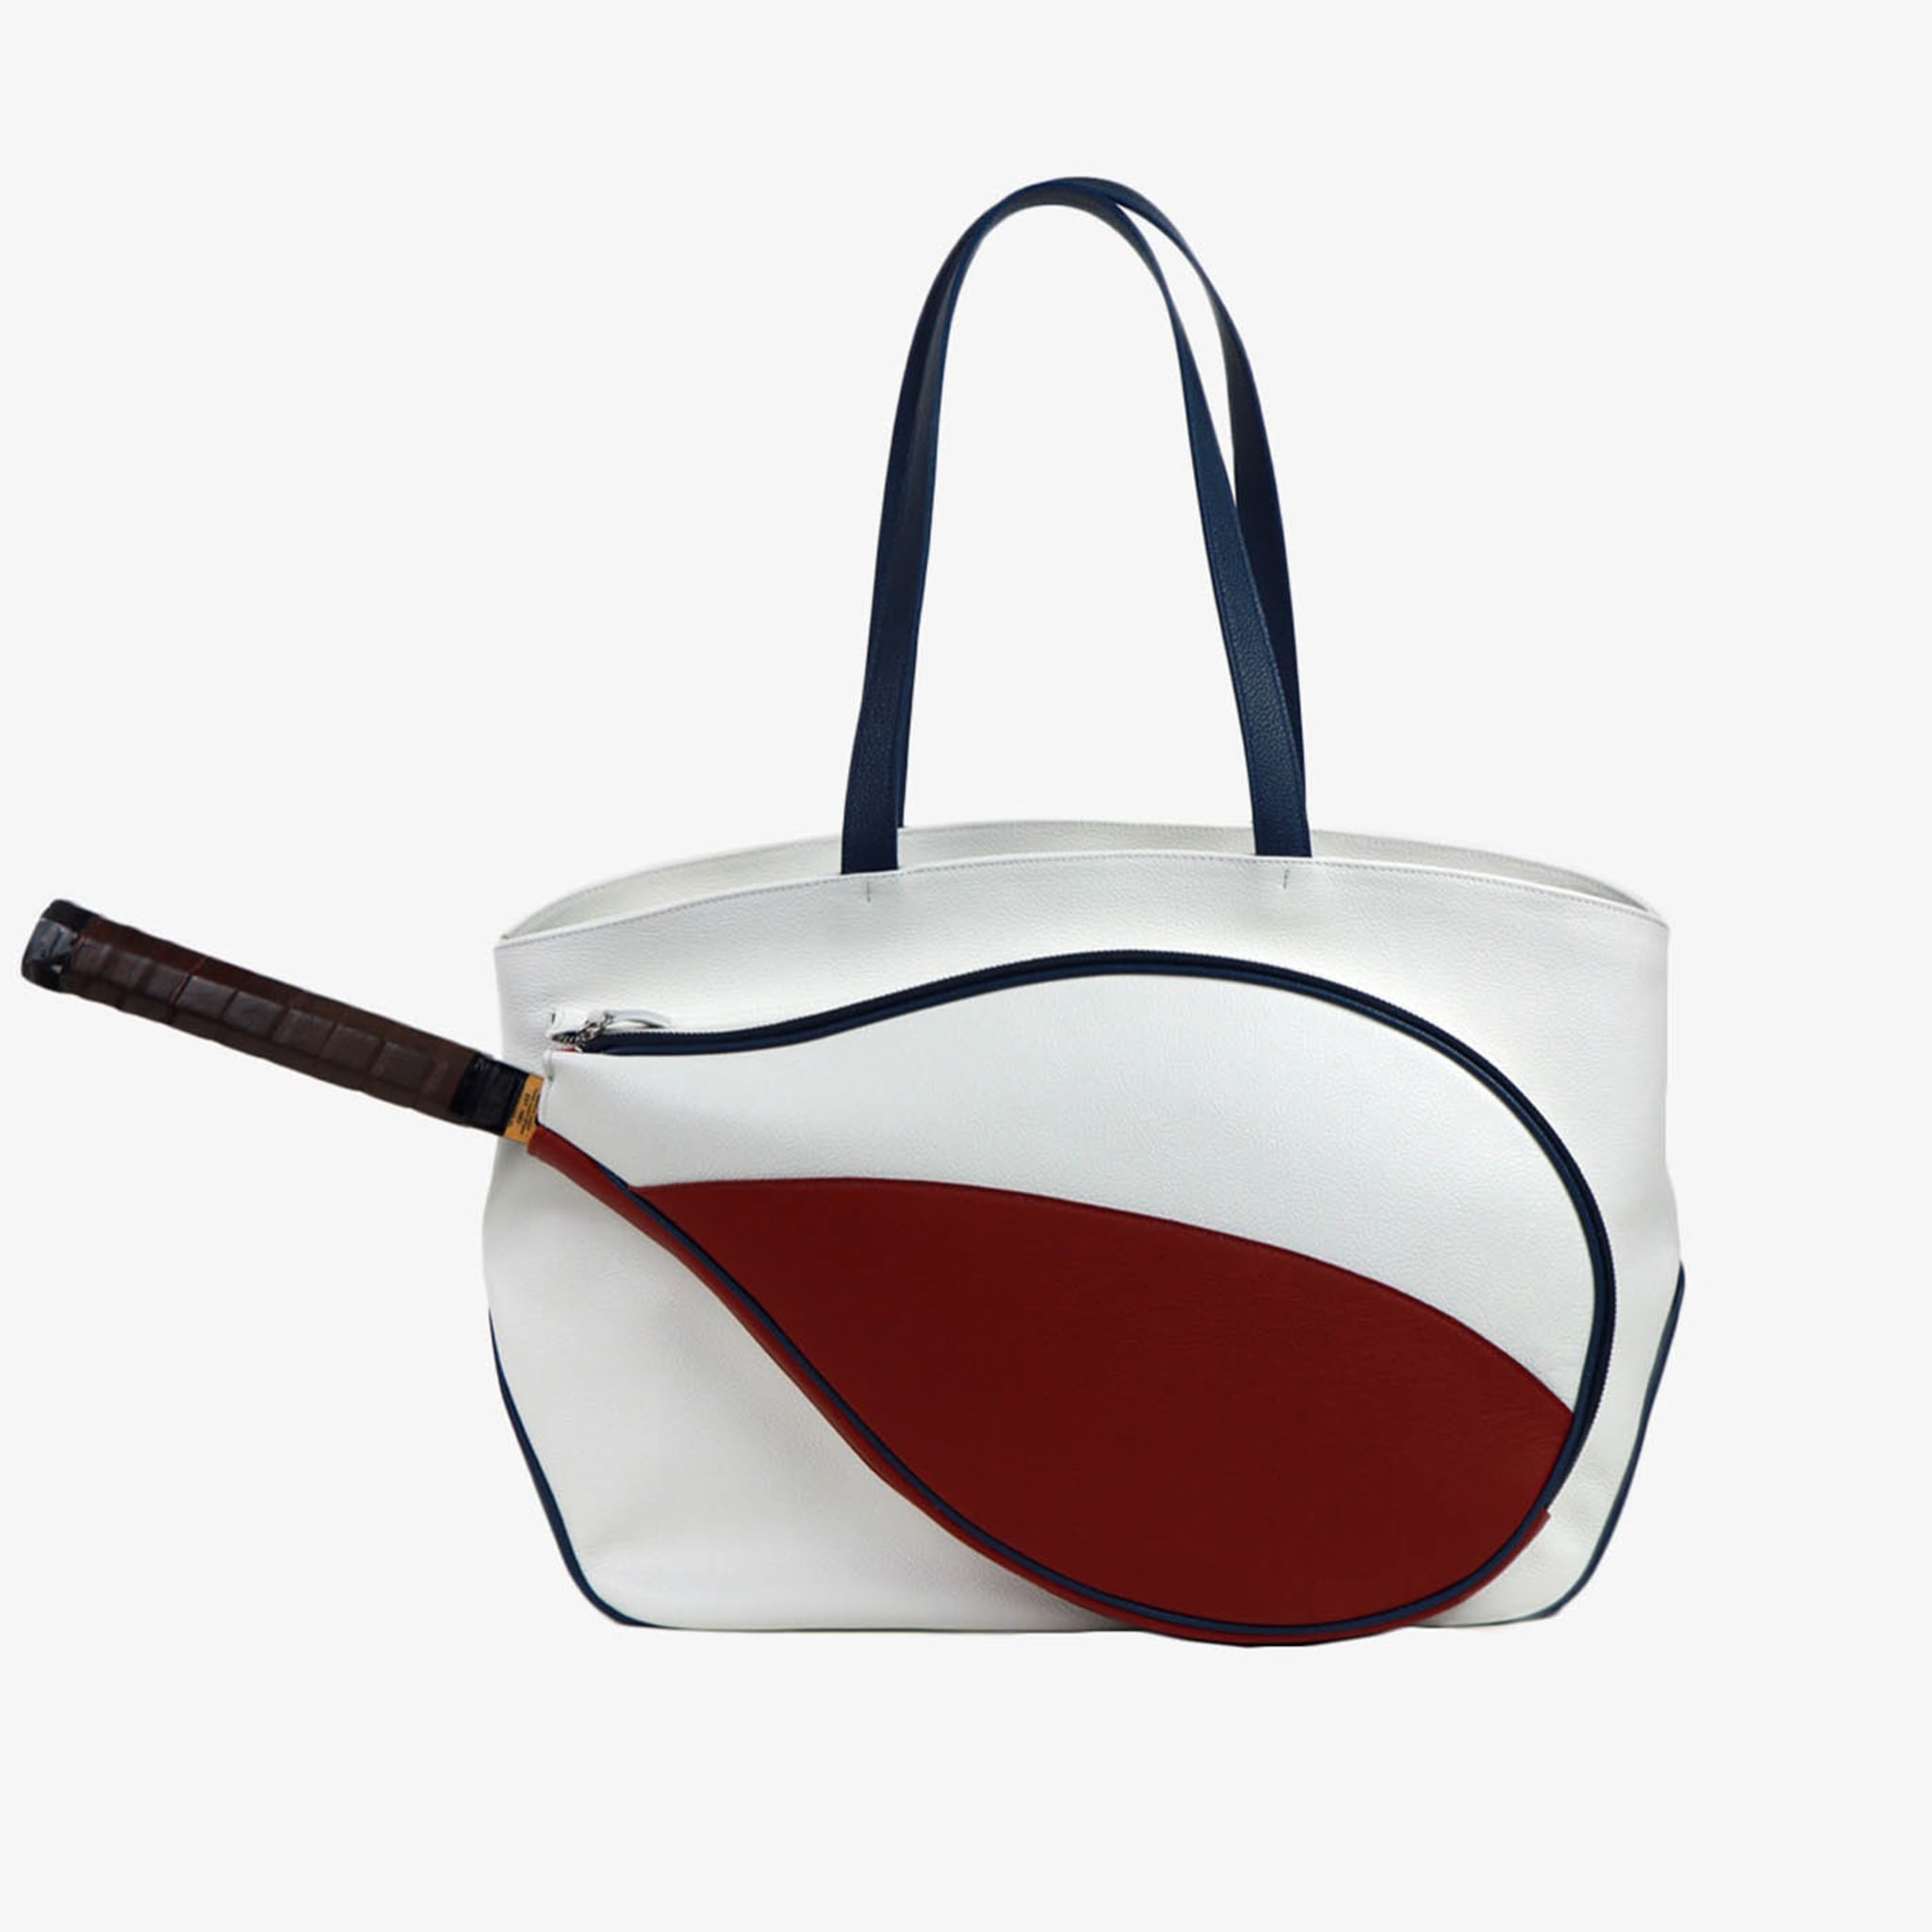 Bolsa de deporte blanca/roja/azul con bolsillo en forma de raqueta de tenis - Vista alternativa 3